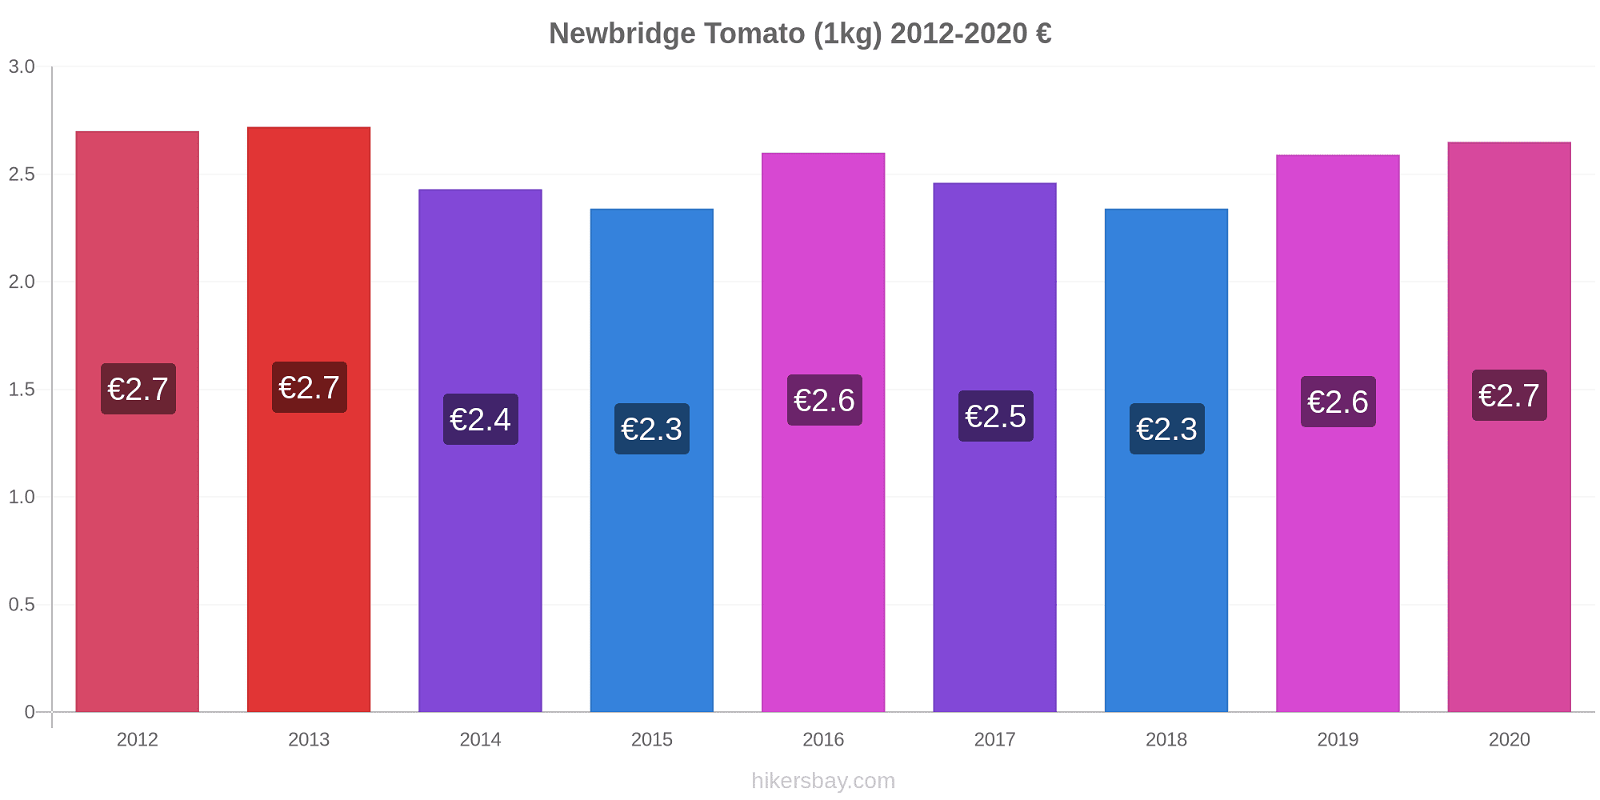 Newbridge price changes Tomato (1kg) hikersbay.com